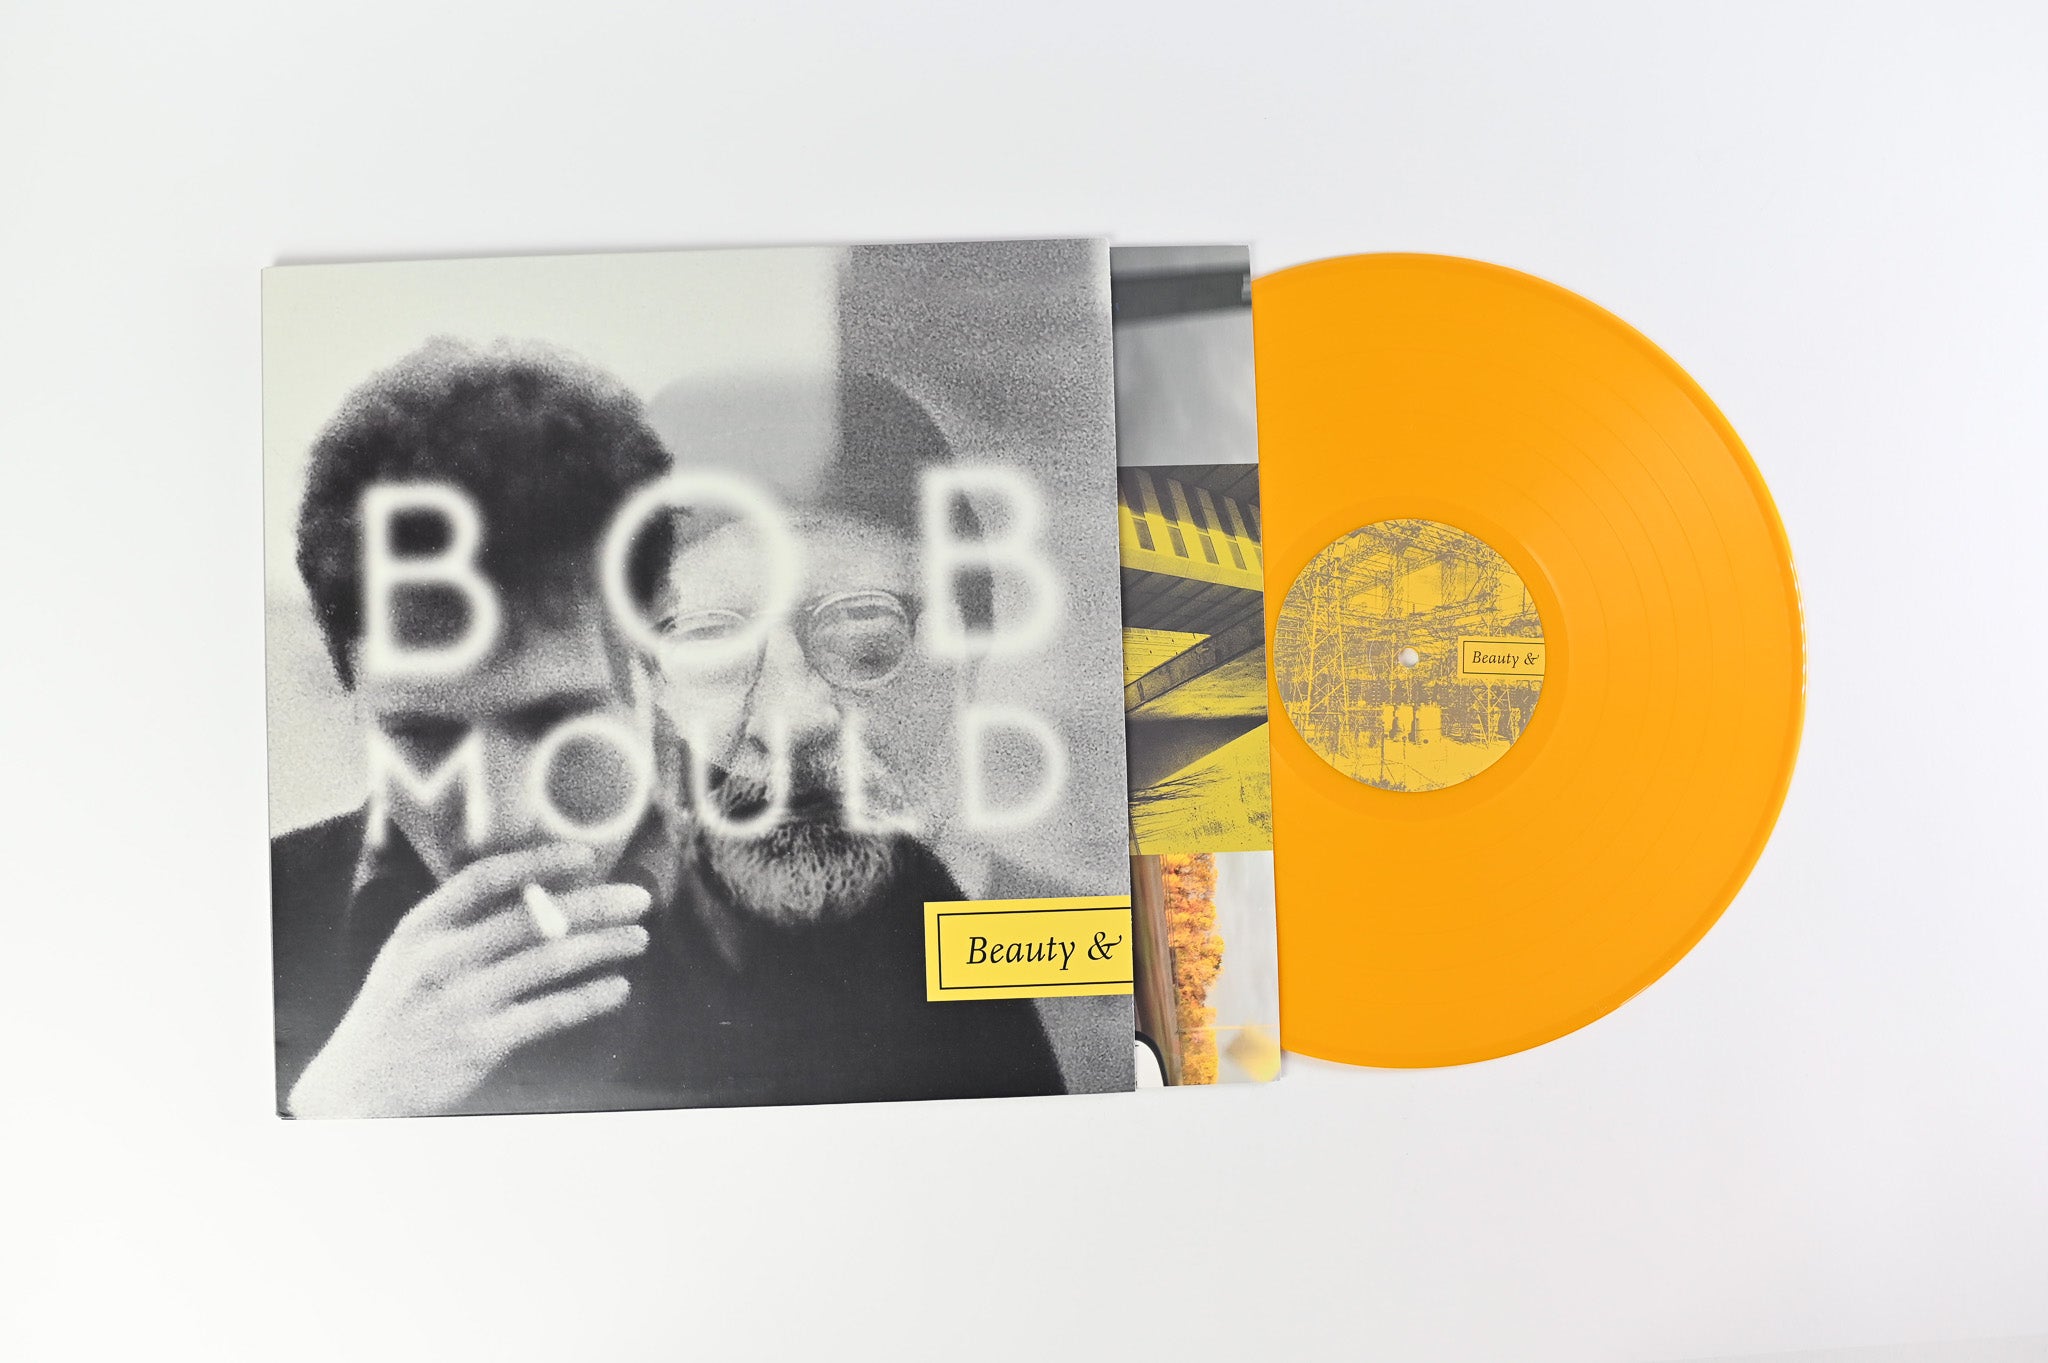 Bob Mould - Beauty & Ruin on Merge Records - Yellow Vinyl